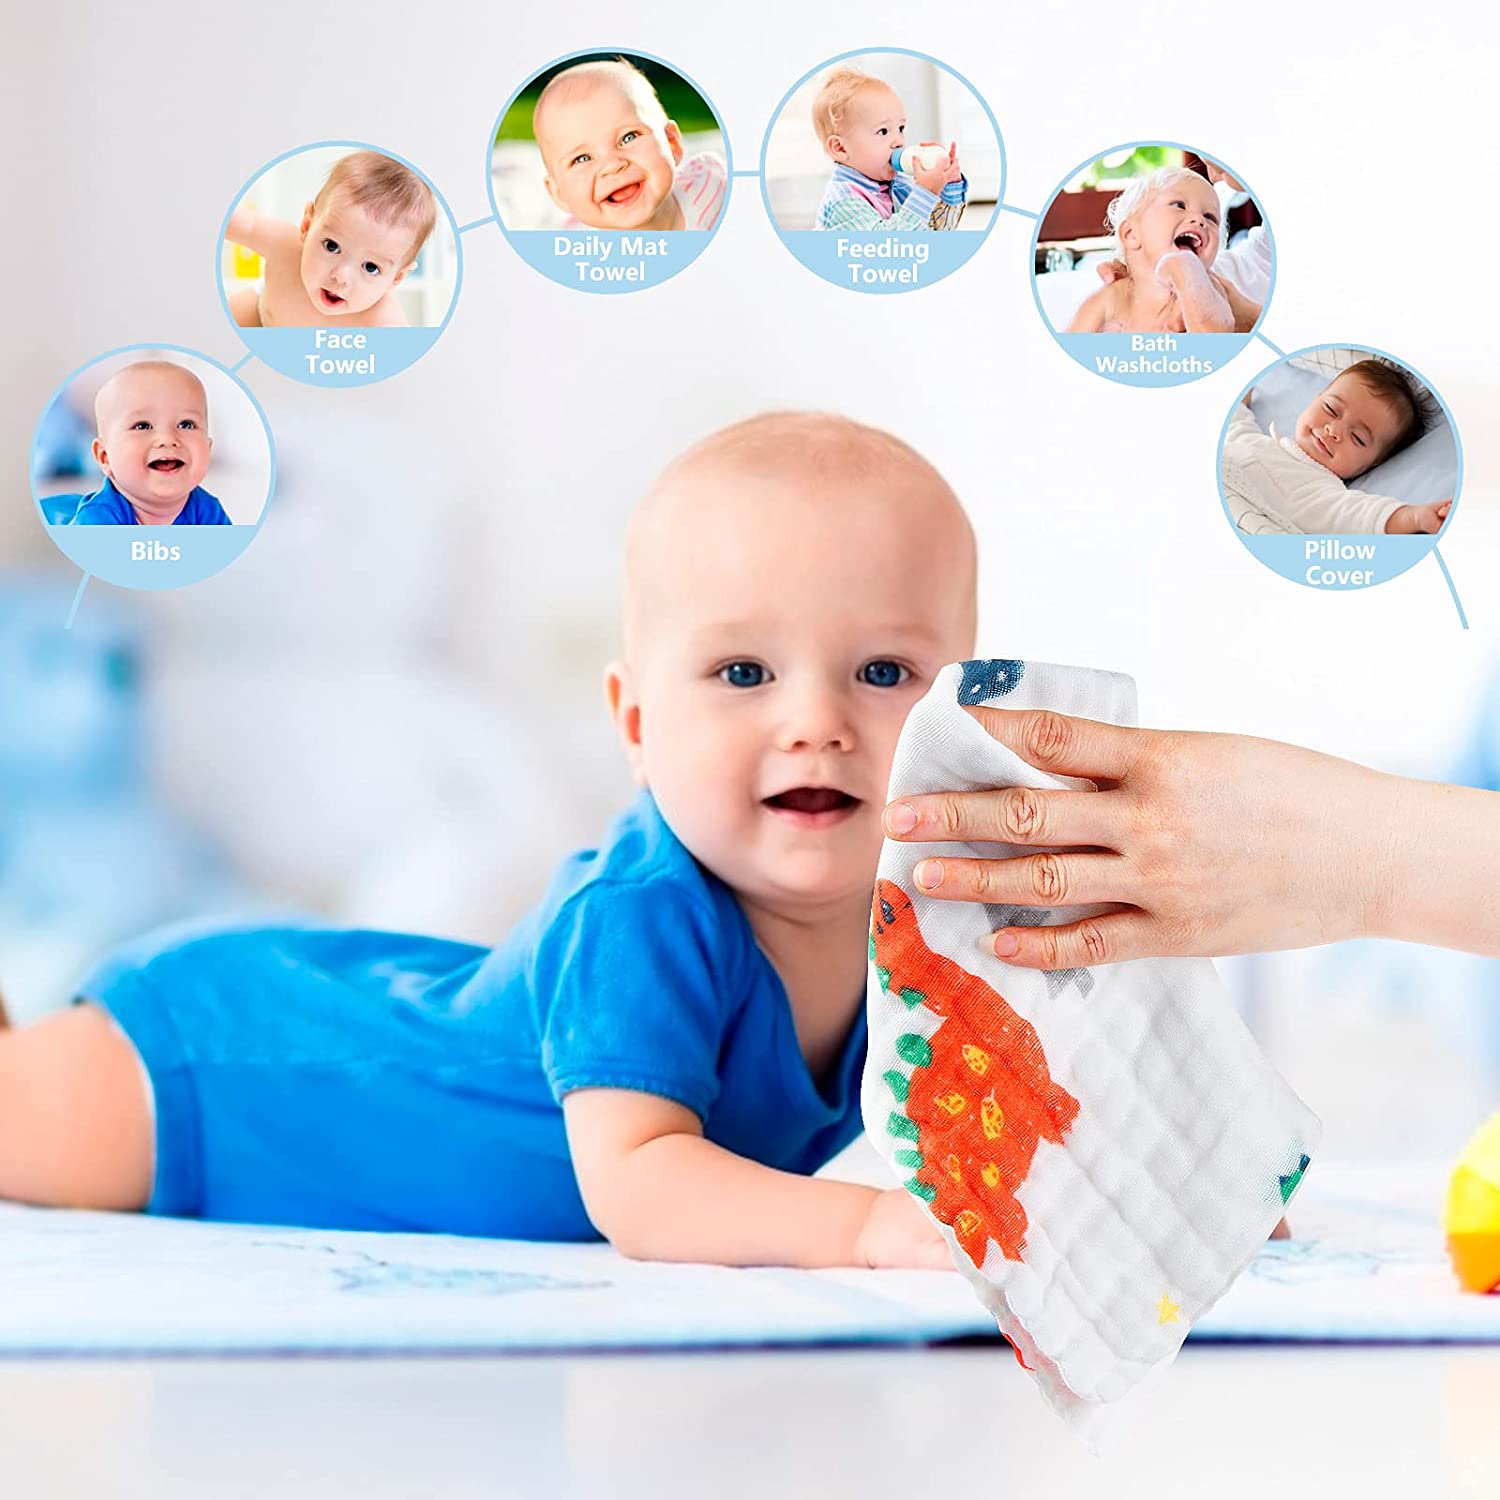 Newborn Baby Unisex Cotton essential Combo - Multicolor - 0-6 Months - 9 Items